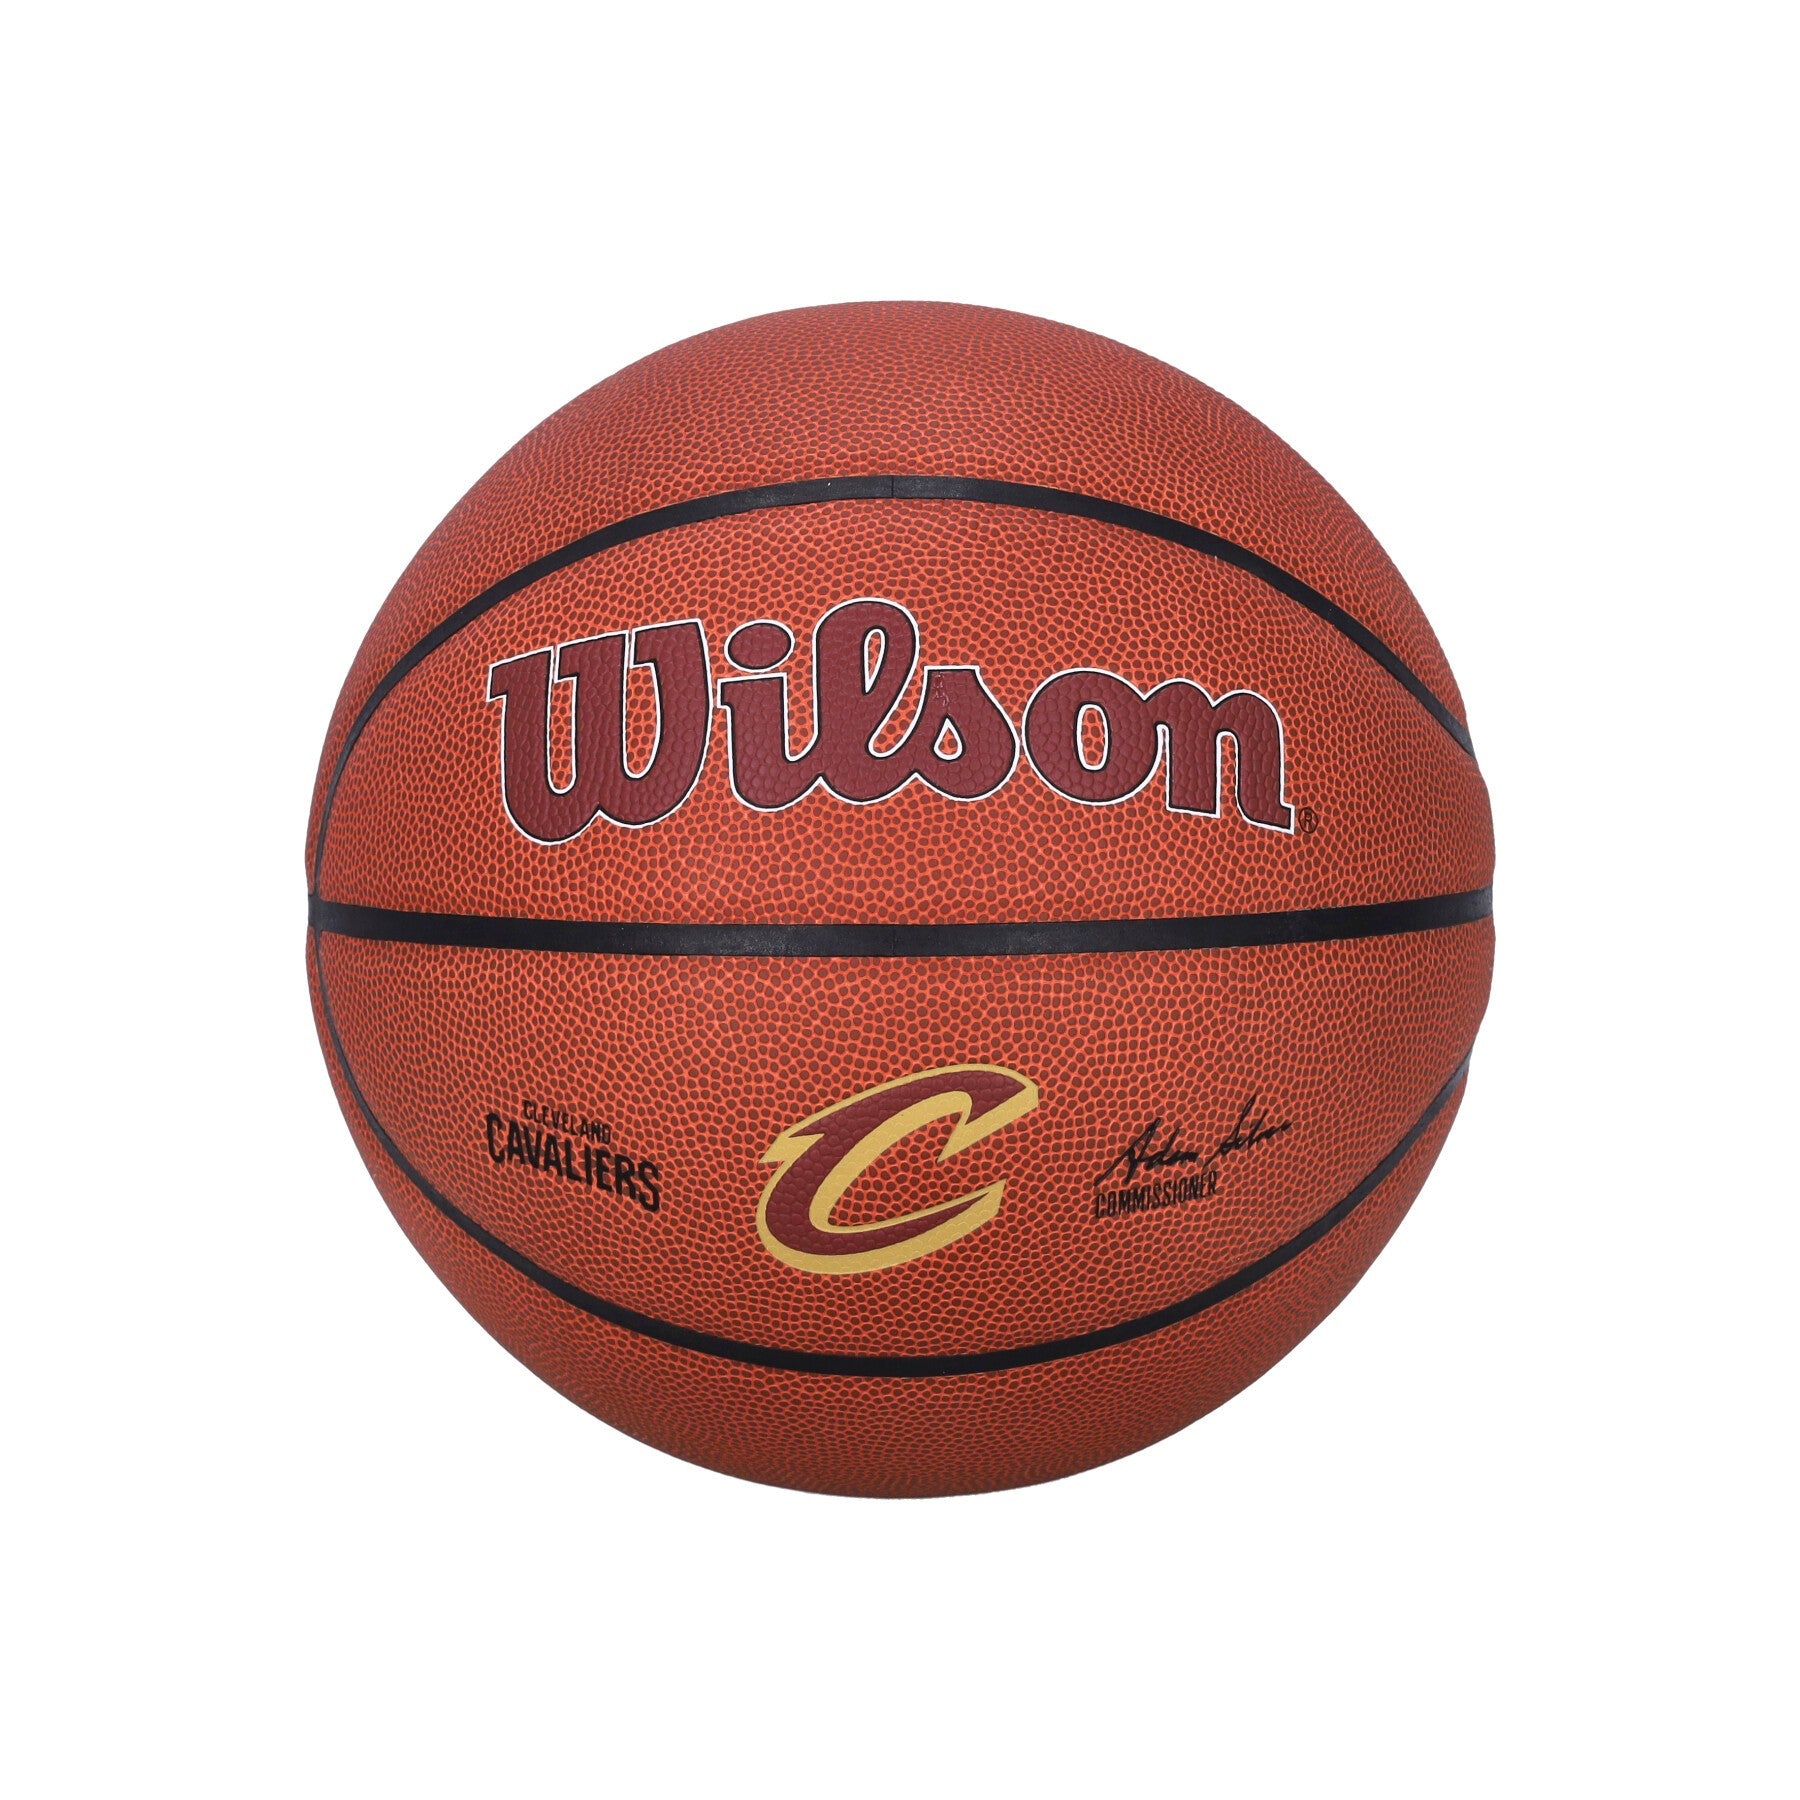 Wilson Team, Pallone Uomo Nba Team Alliance Basketball Size 7 Clecav, Brown/original Team Colors